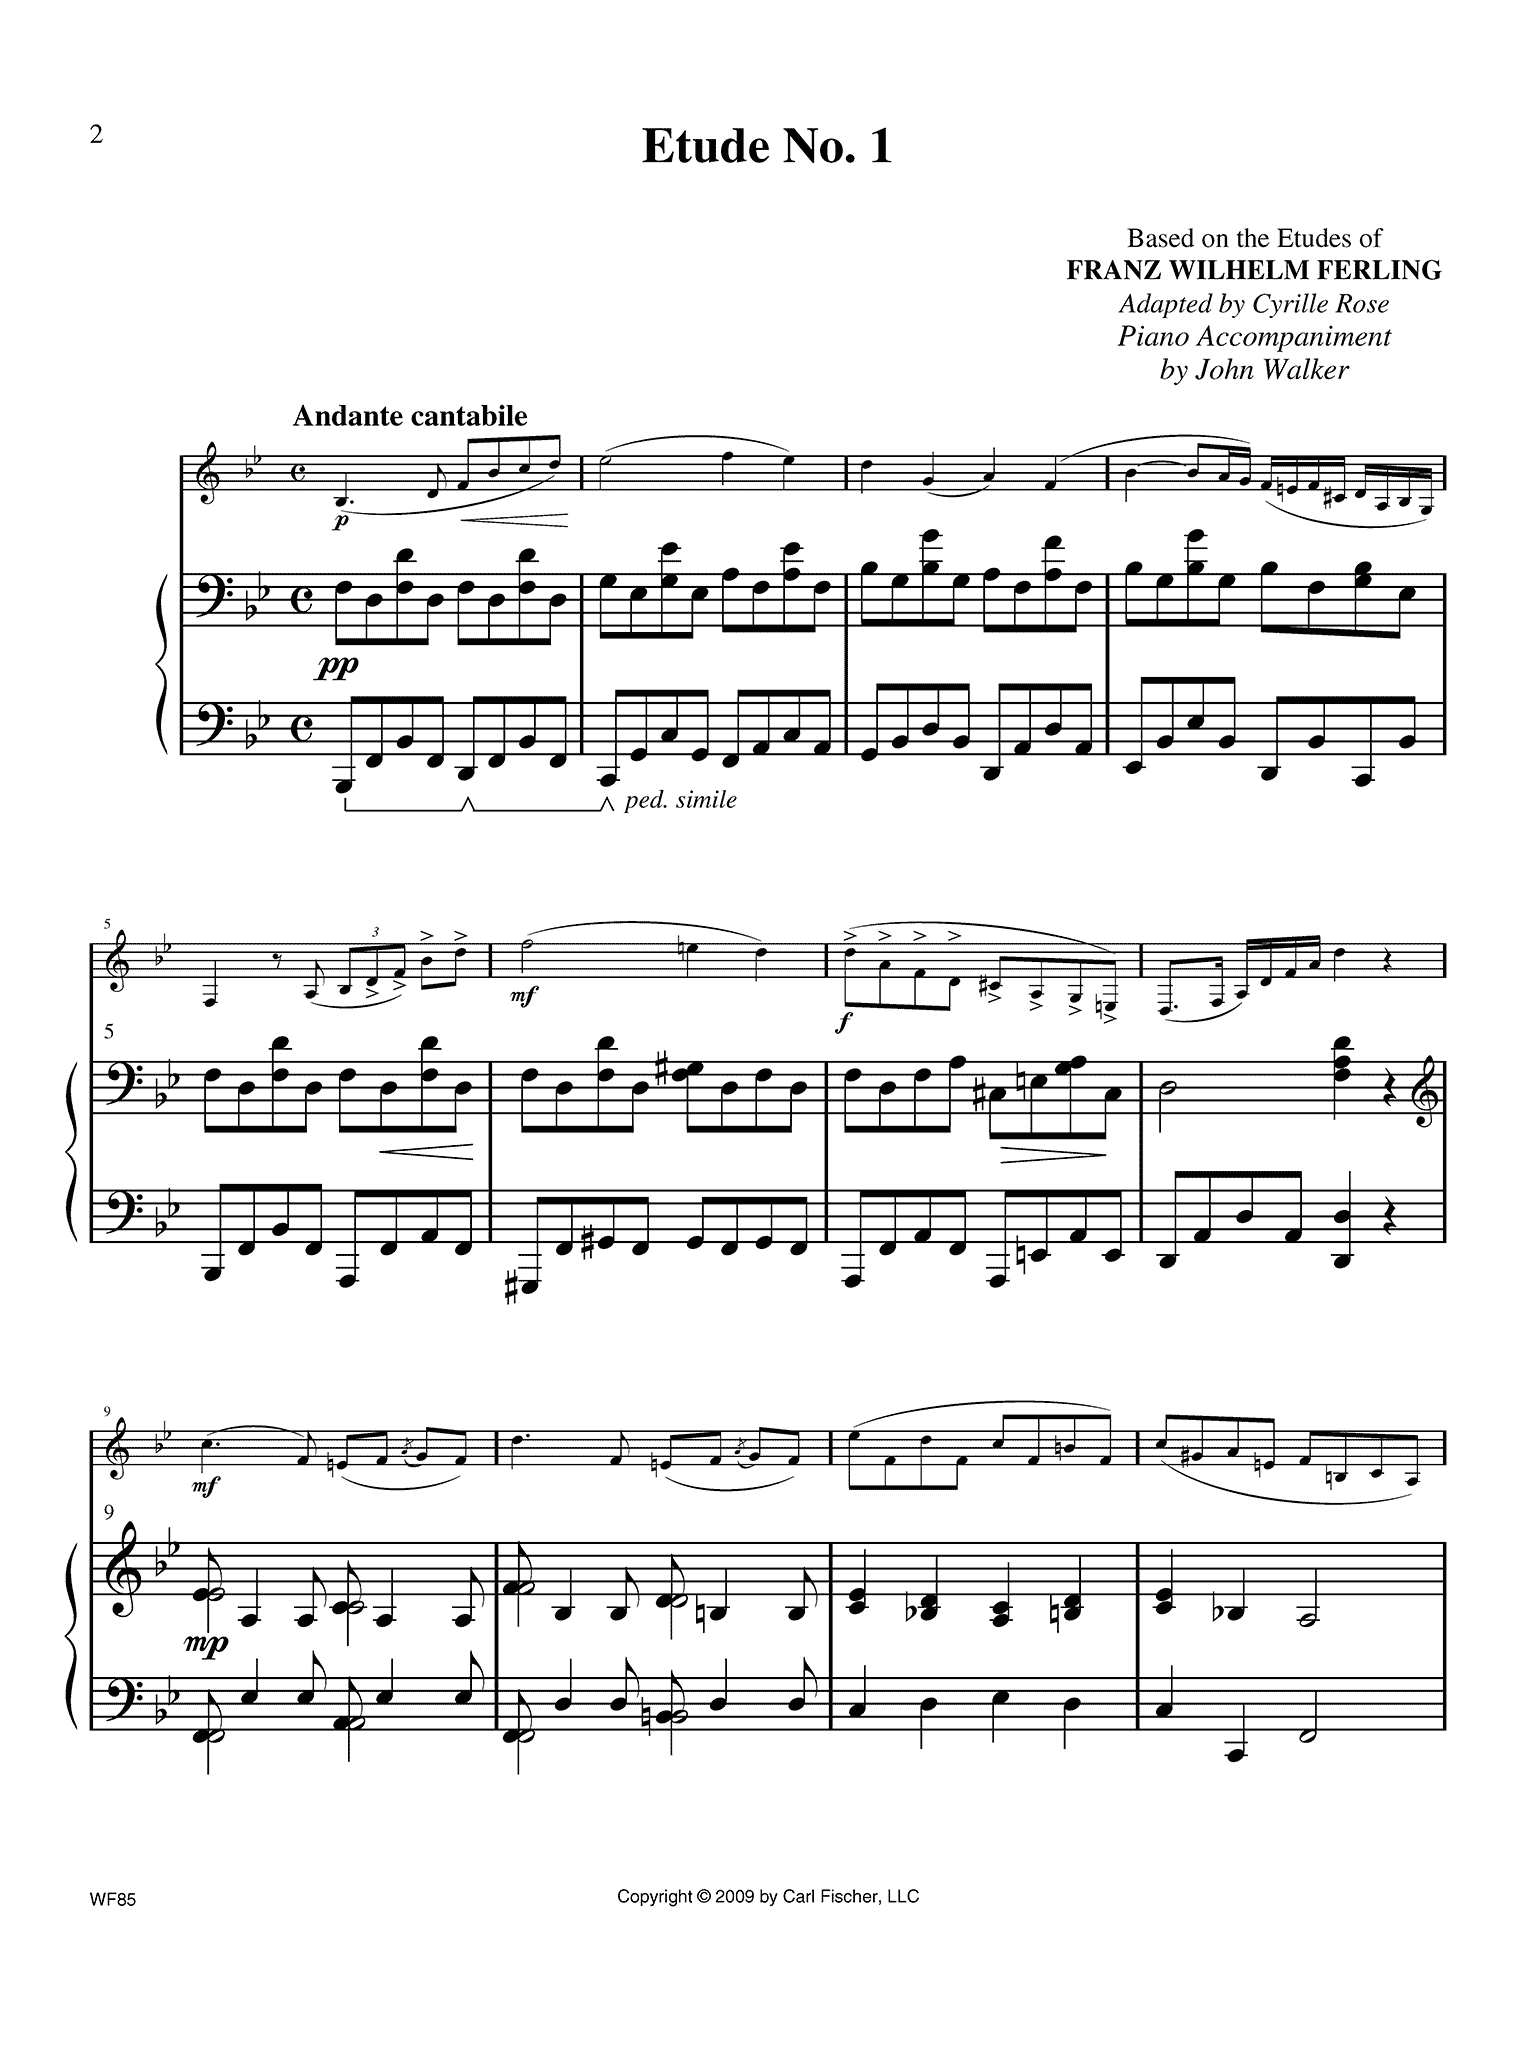 Rose 32 Etudes No. 1 piano accompaniment 